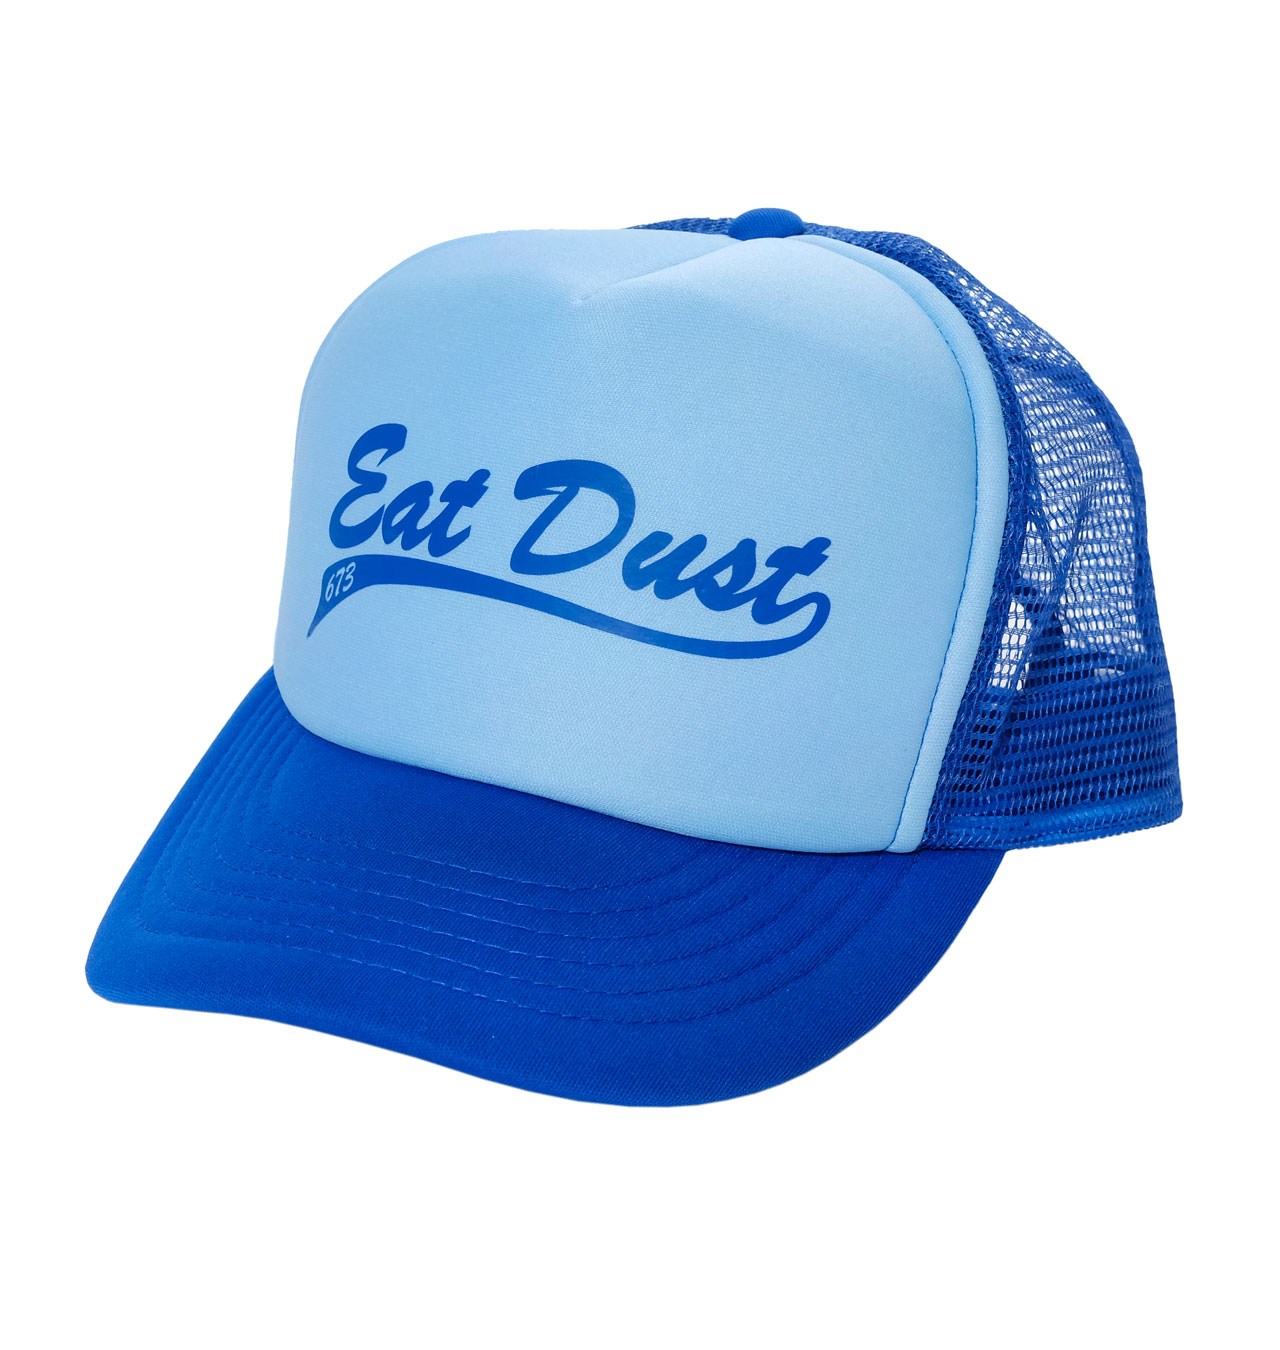 Eat-Dust---Baseball-Logo-Trucker-Cap---Navy-Blue-21